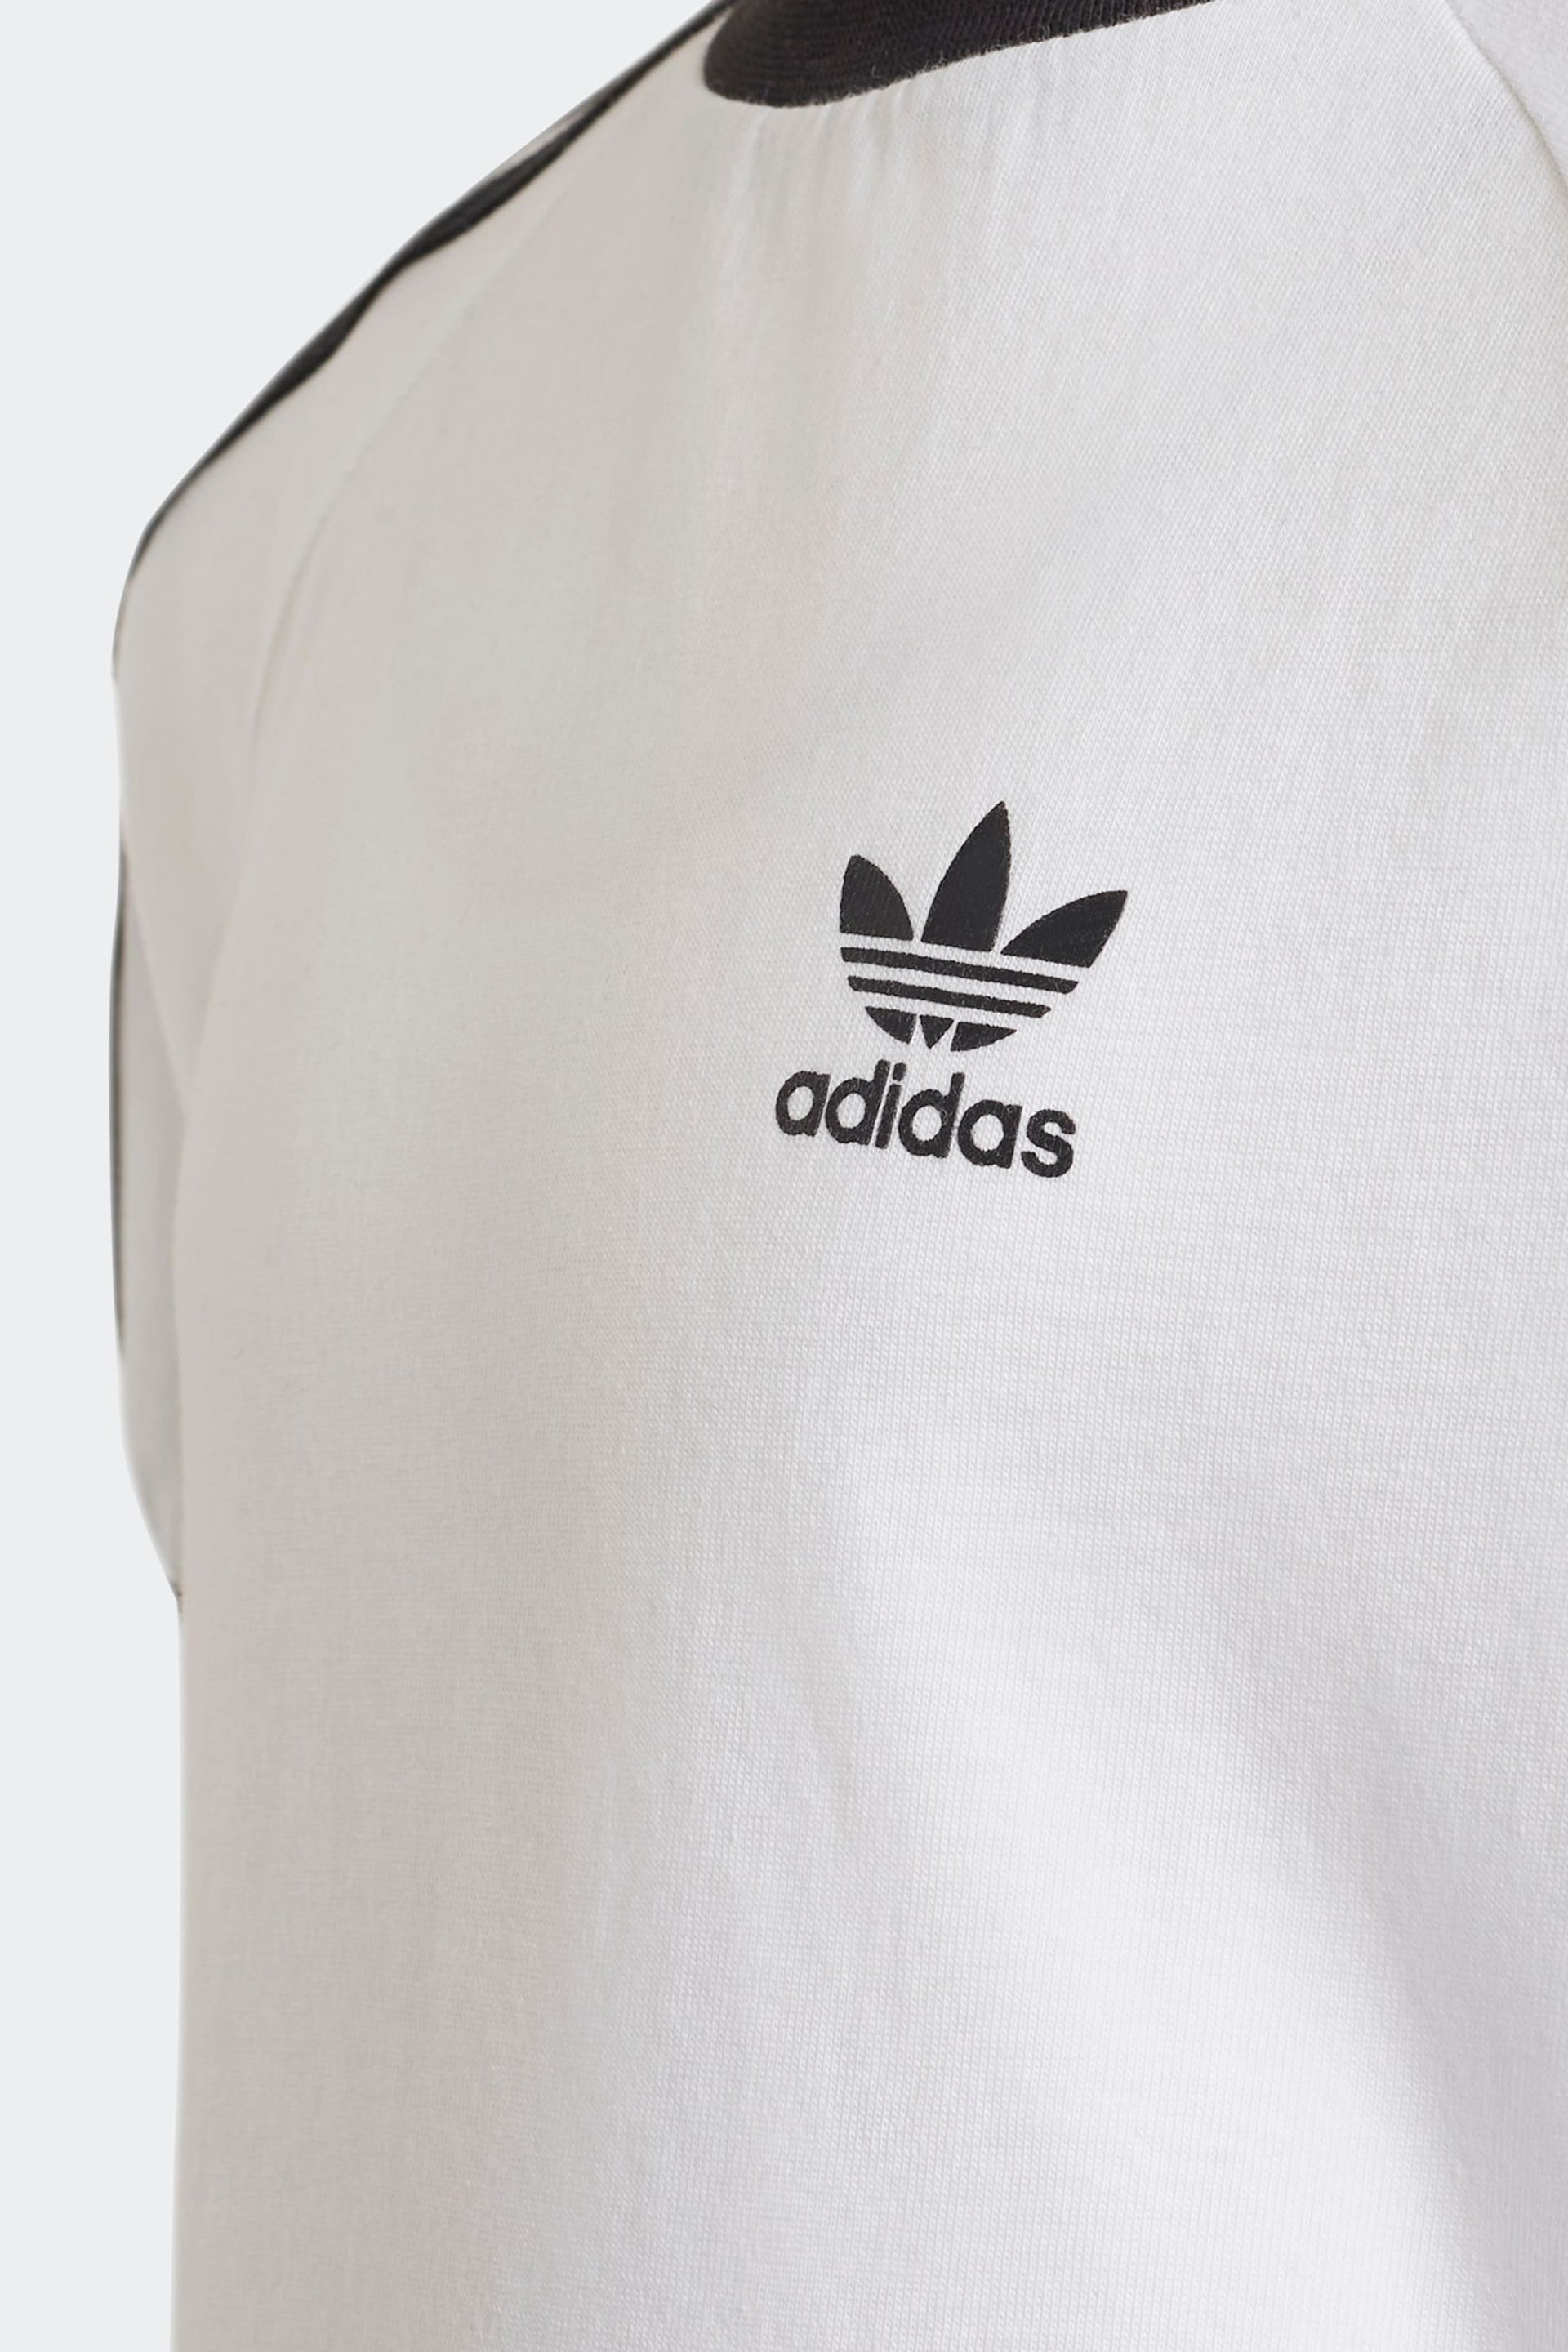 adidas Originals Adicolor 3-Stripes T-Shirt - Image 3 of 5